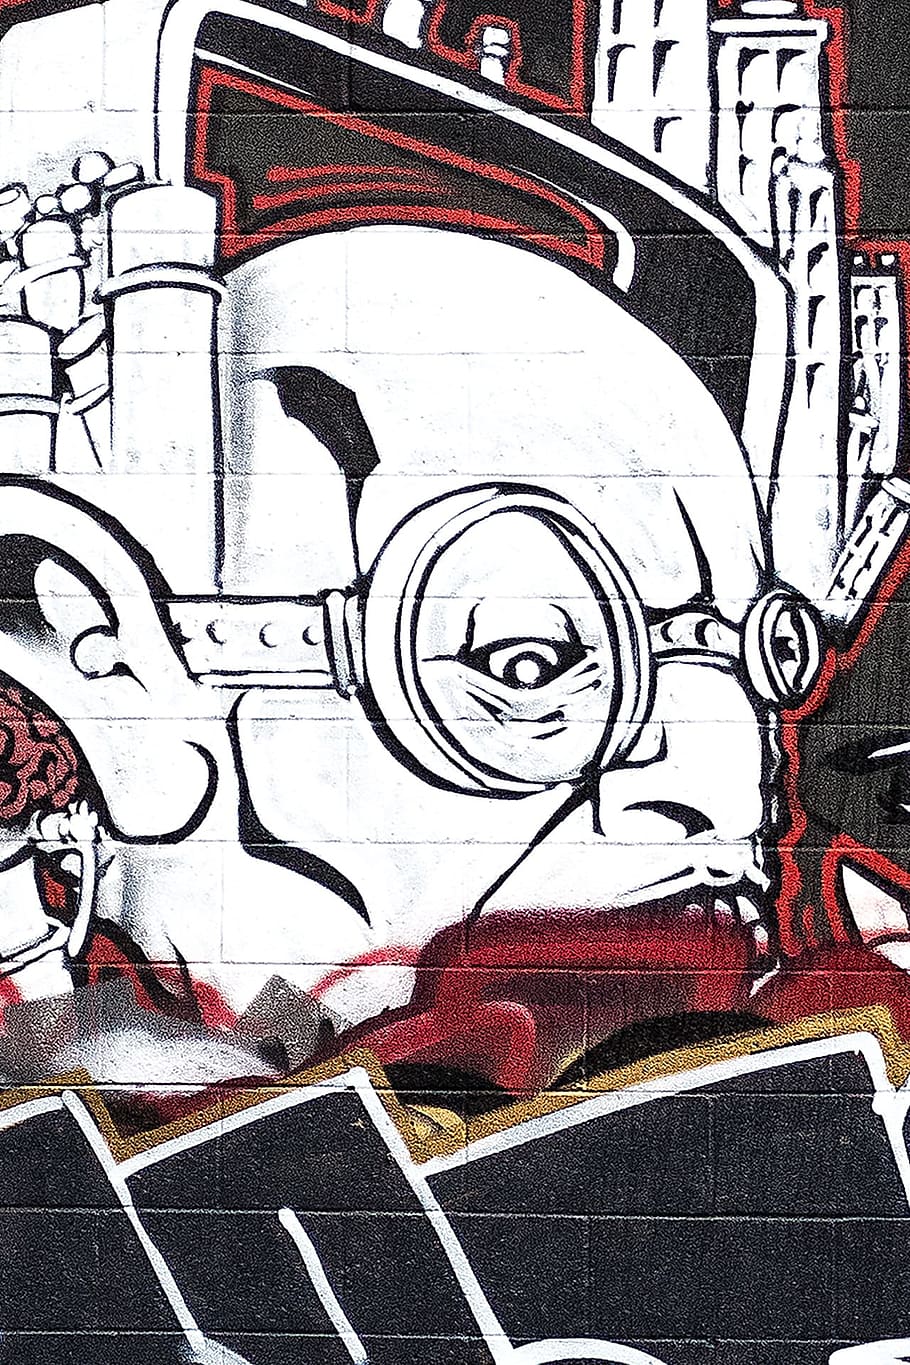 Graffiti, Fondo, Grunge, Street Art, pared de graffiti, graffiti art, artístico, pintado, pintura en aerosol, arte